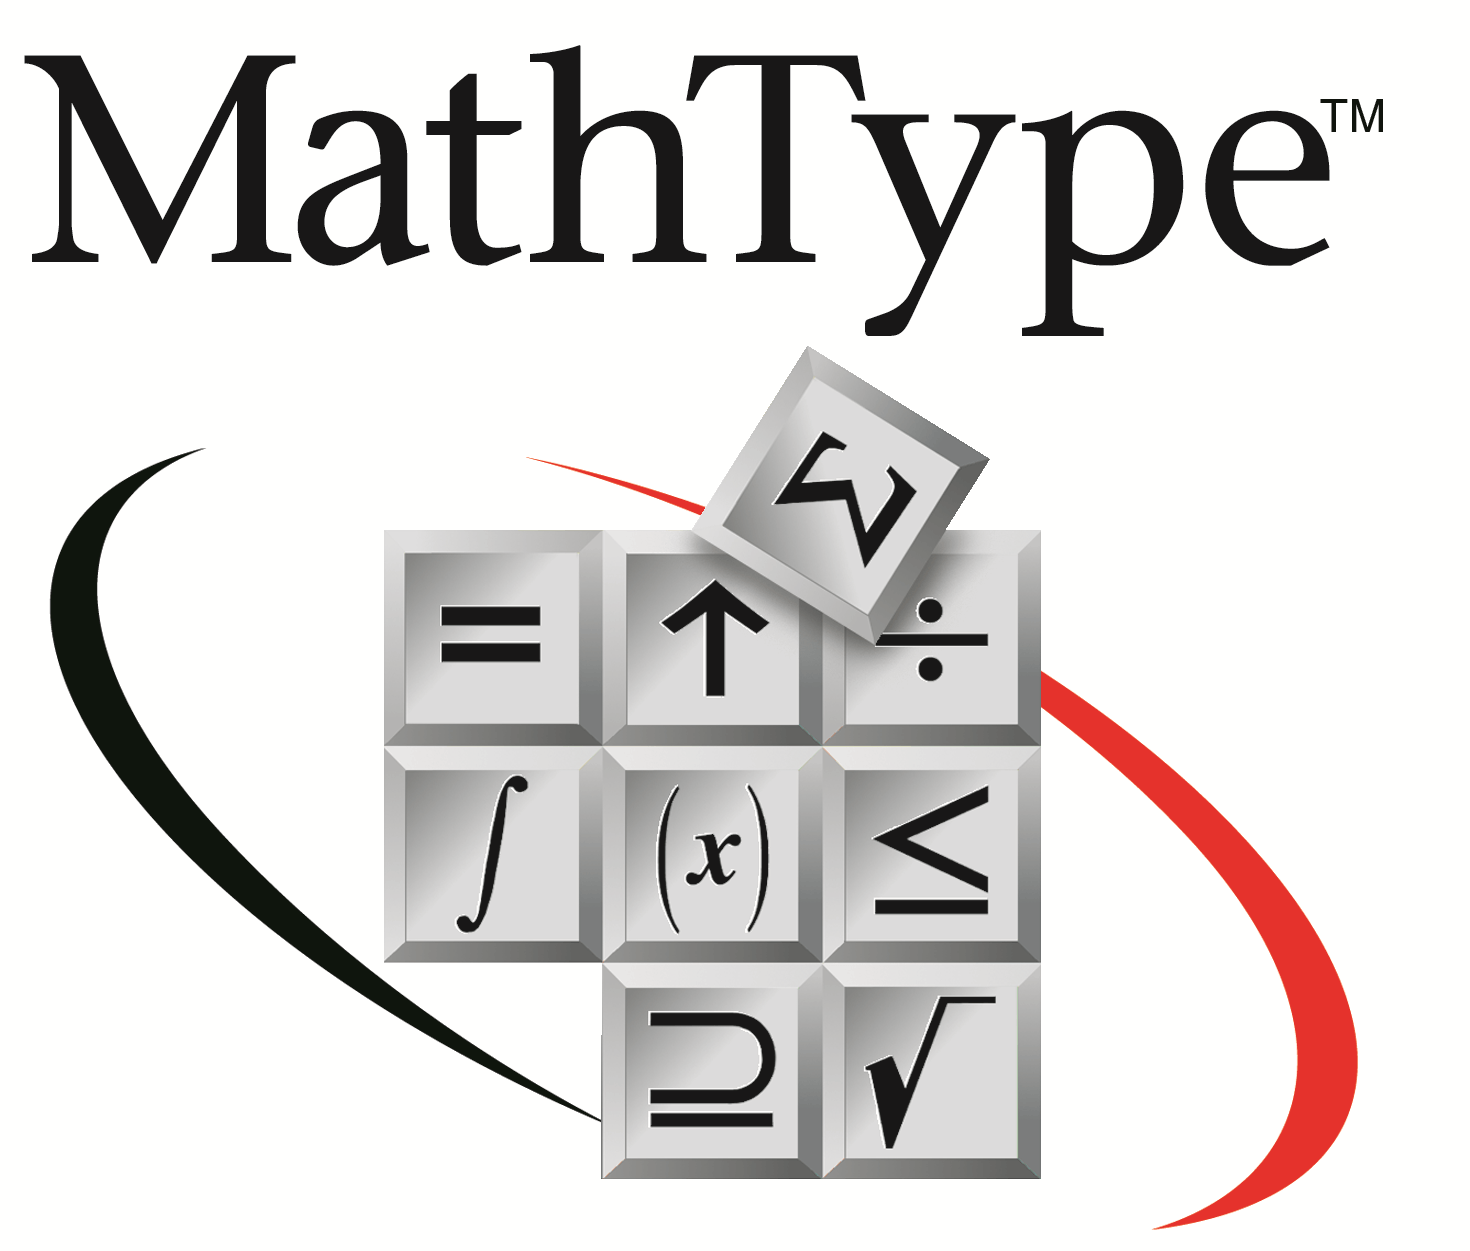 MathType 7.6.0.156 download